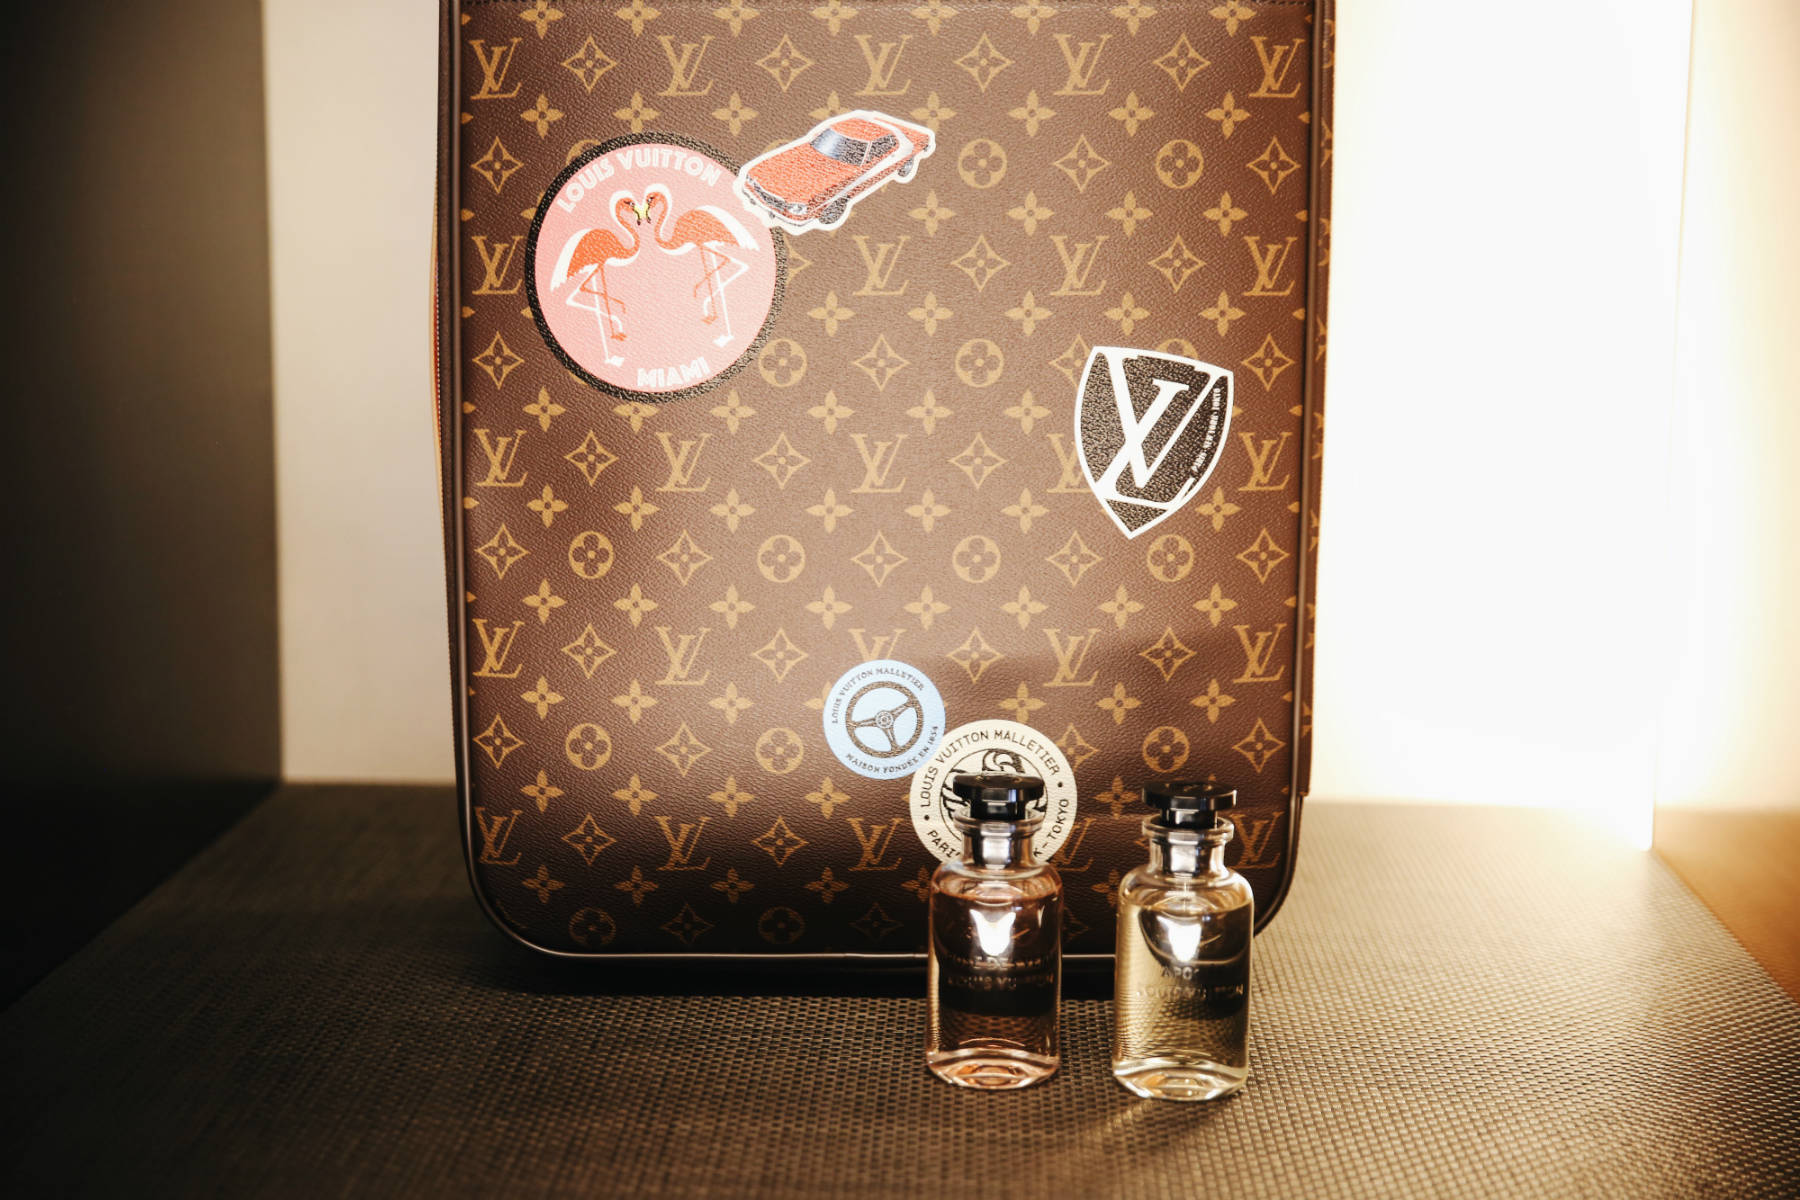 Louis Vuitton monogram suitcase and perfume bottle.